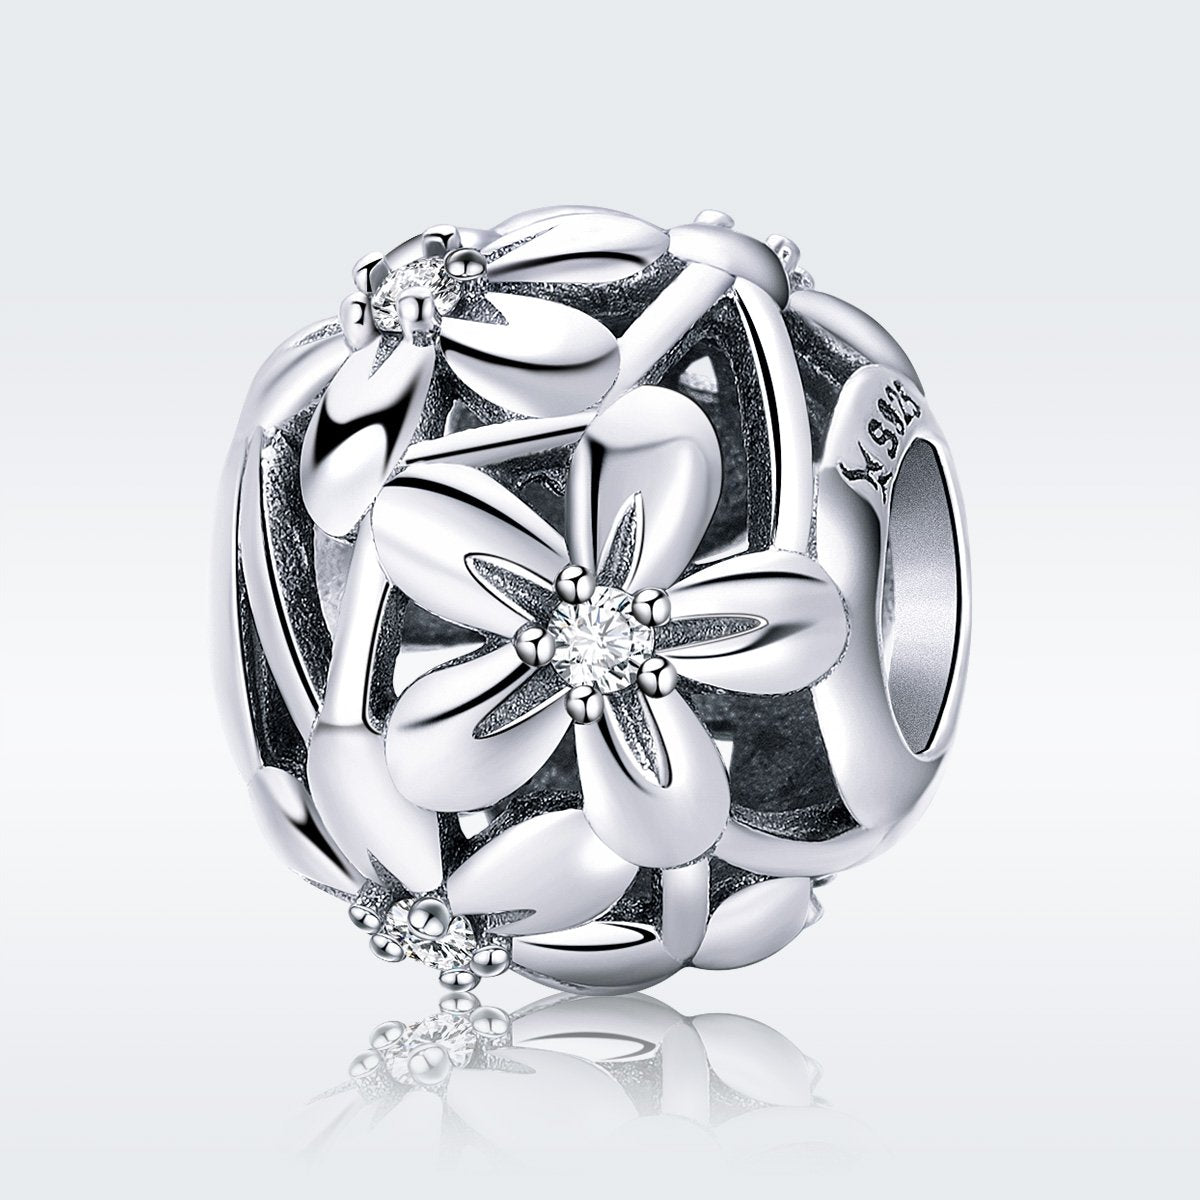 Sterling 925 silver charm the flower planet fits Pandora charm and European charm bracelet Xaxe.com